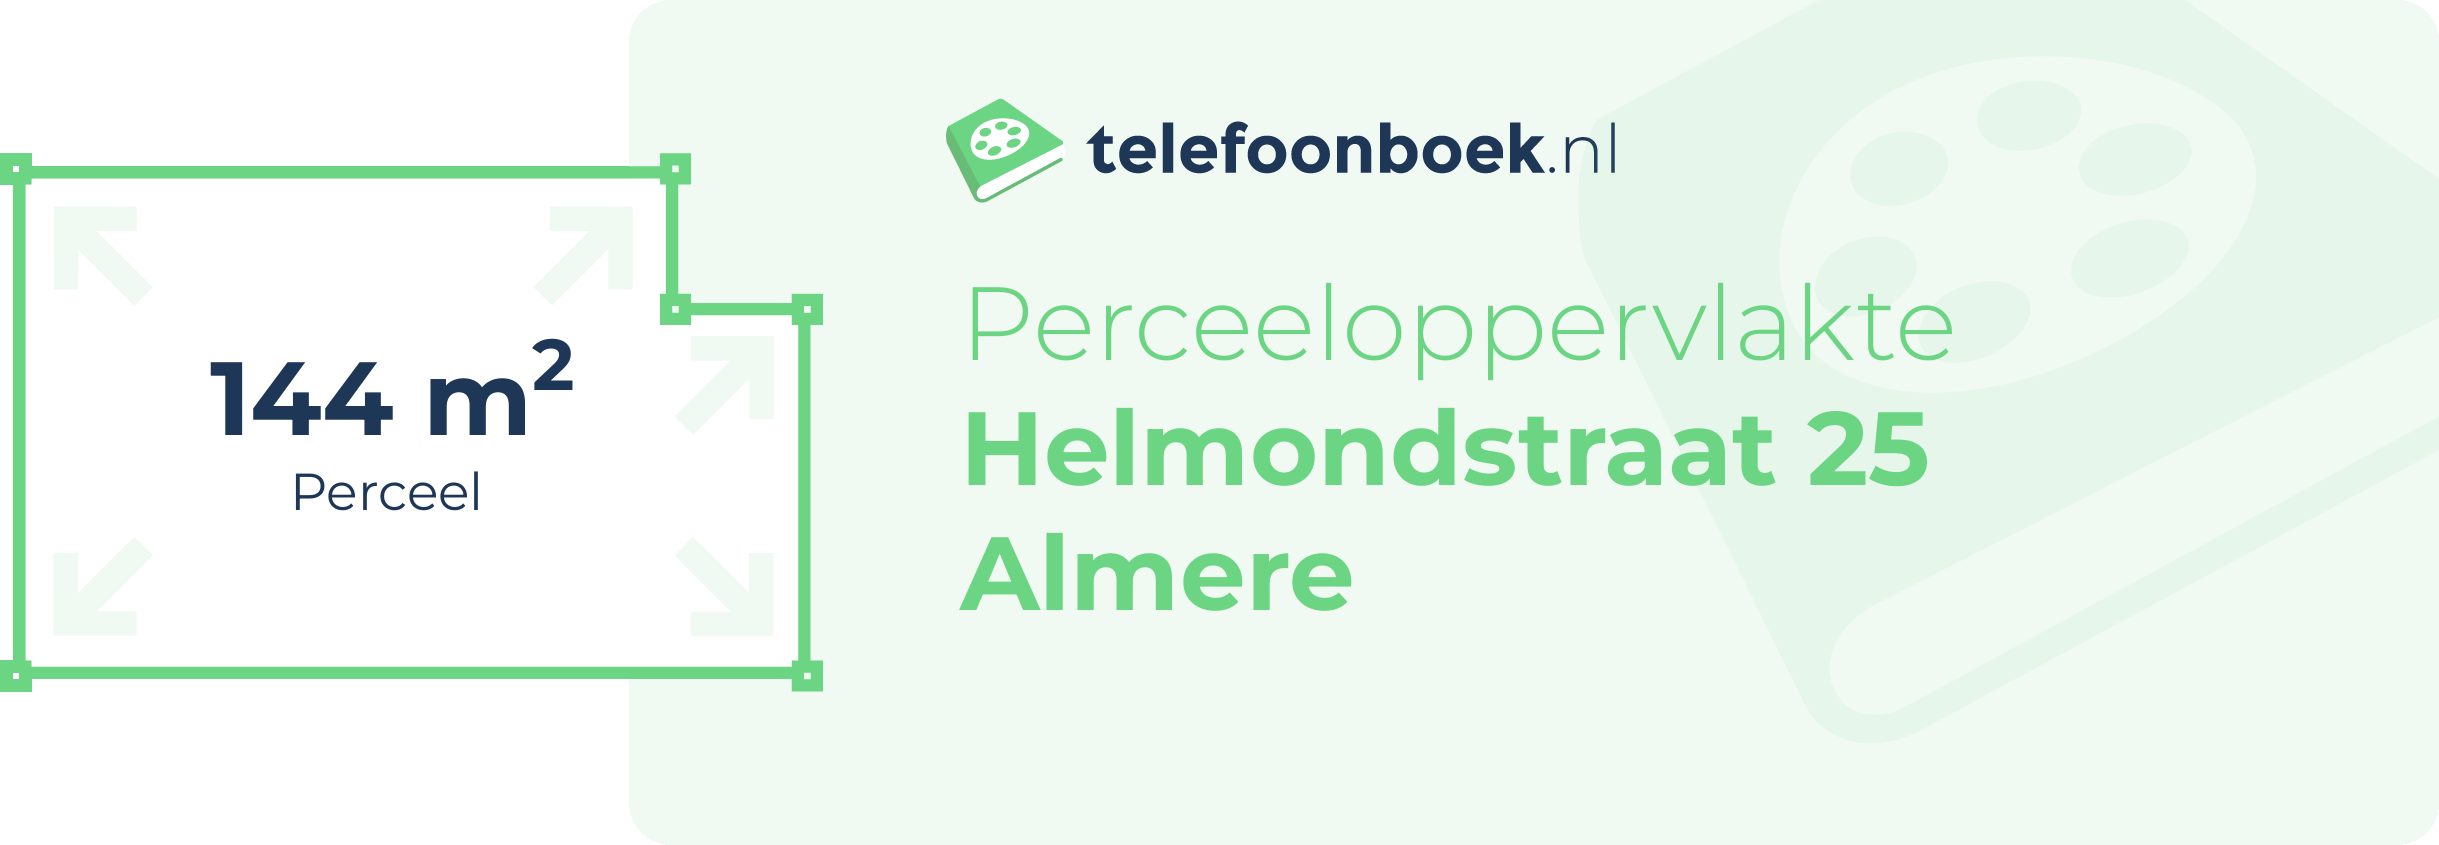 Perceeloppervlakte Helmondstraat 25 Almere